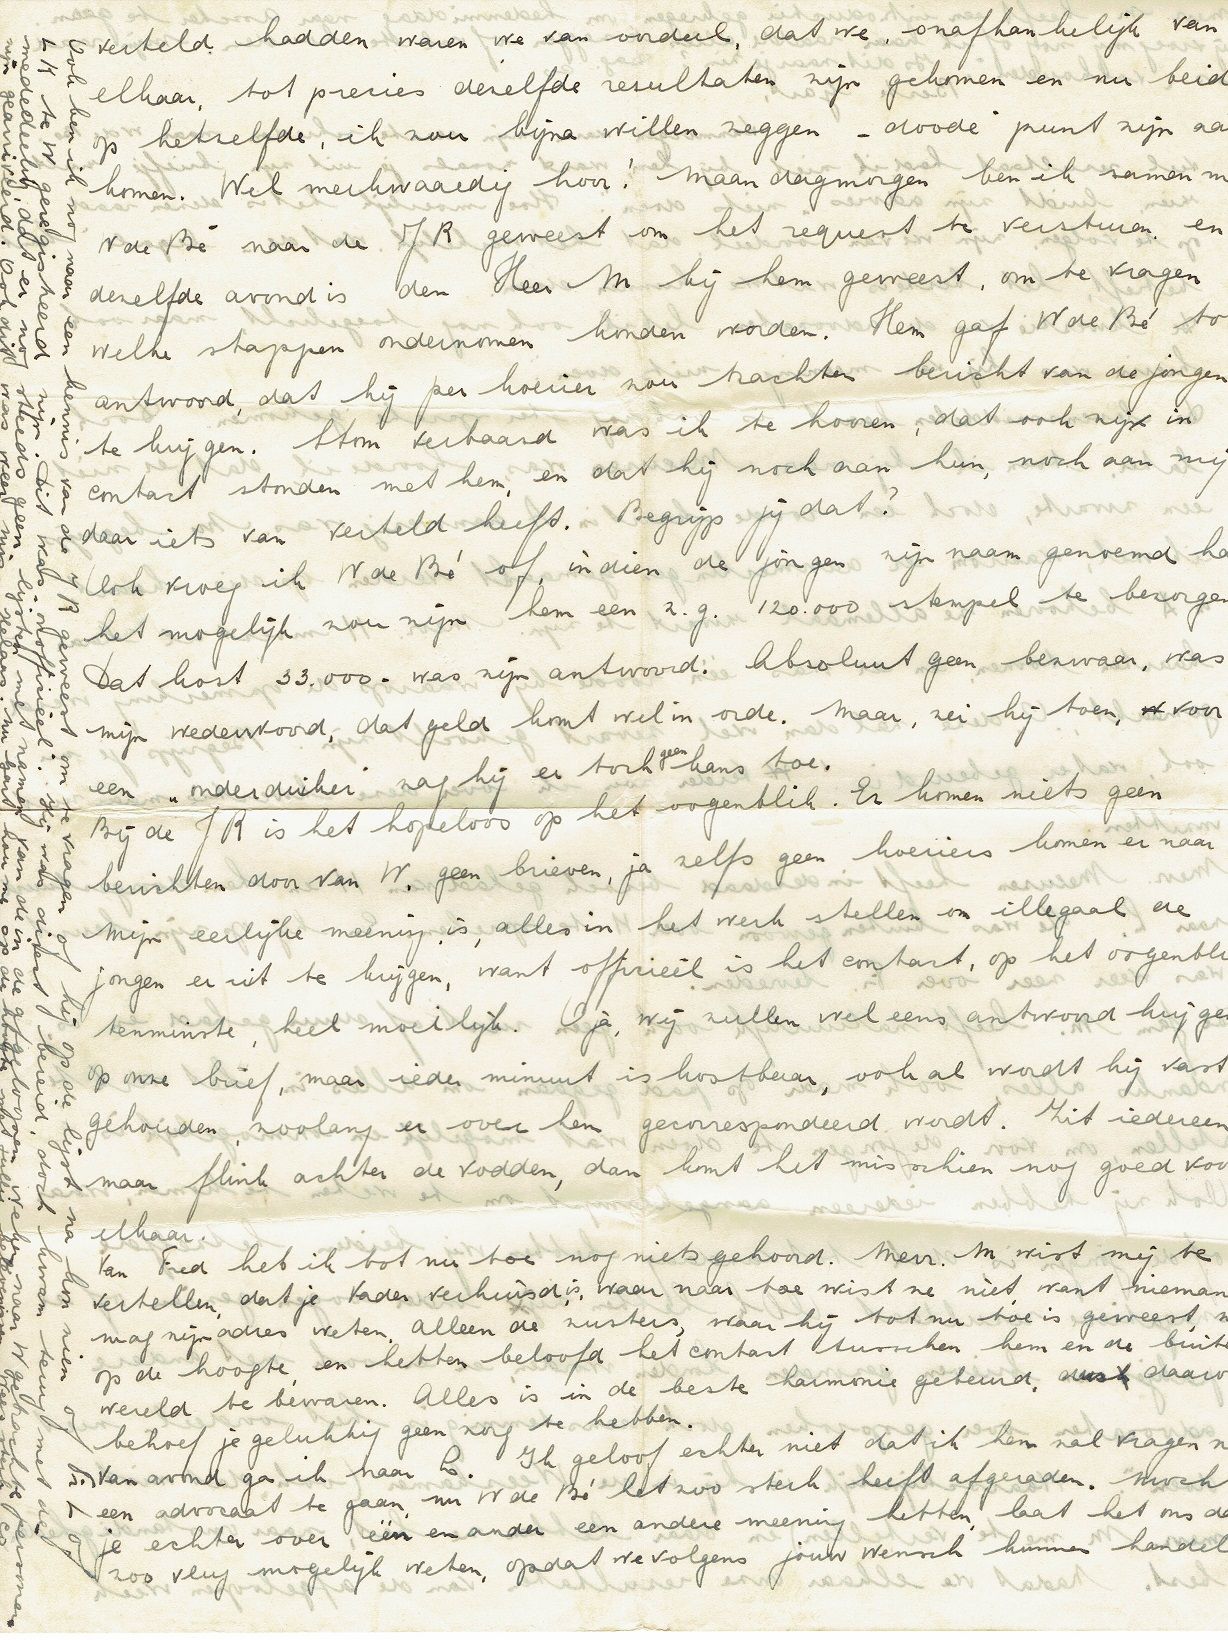 A letter from Co de Wilde to Gart - [Julia Polak to Jules Kan]